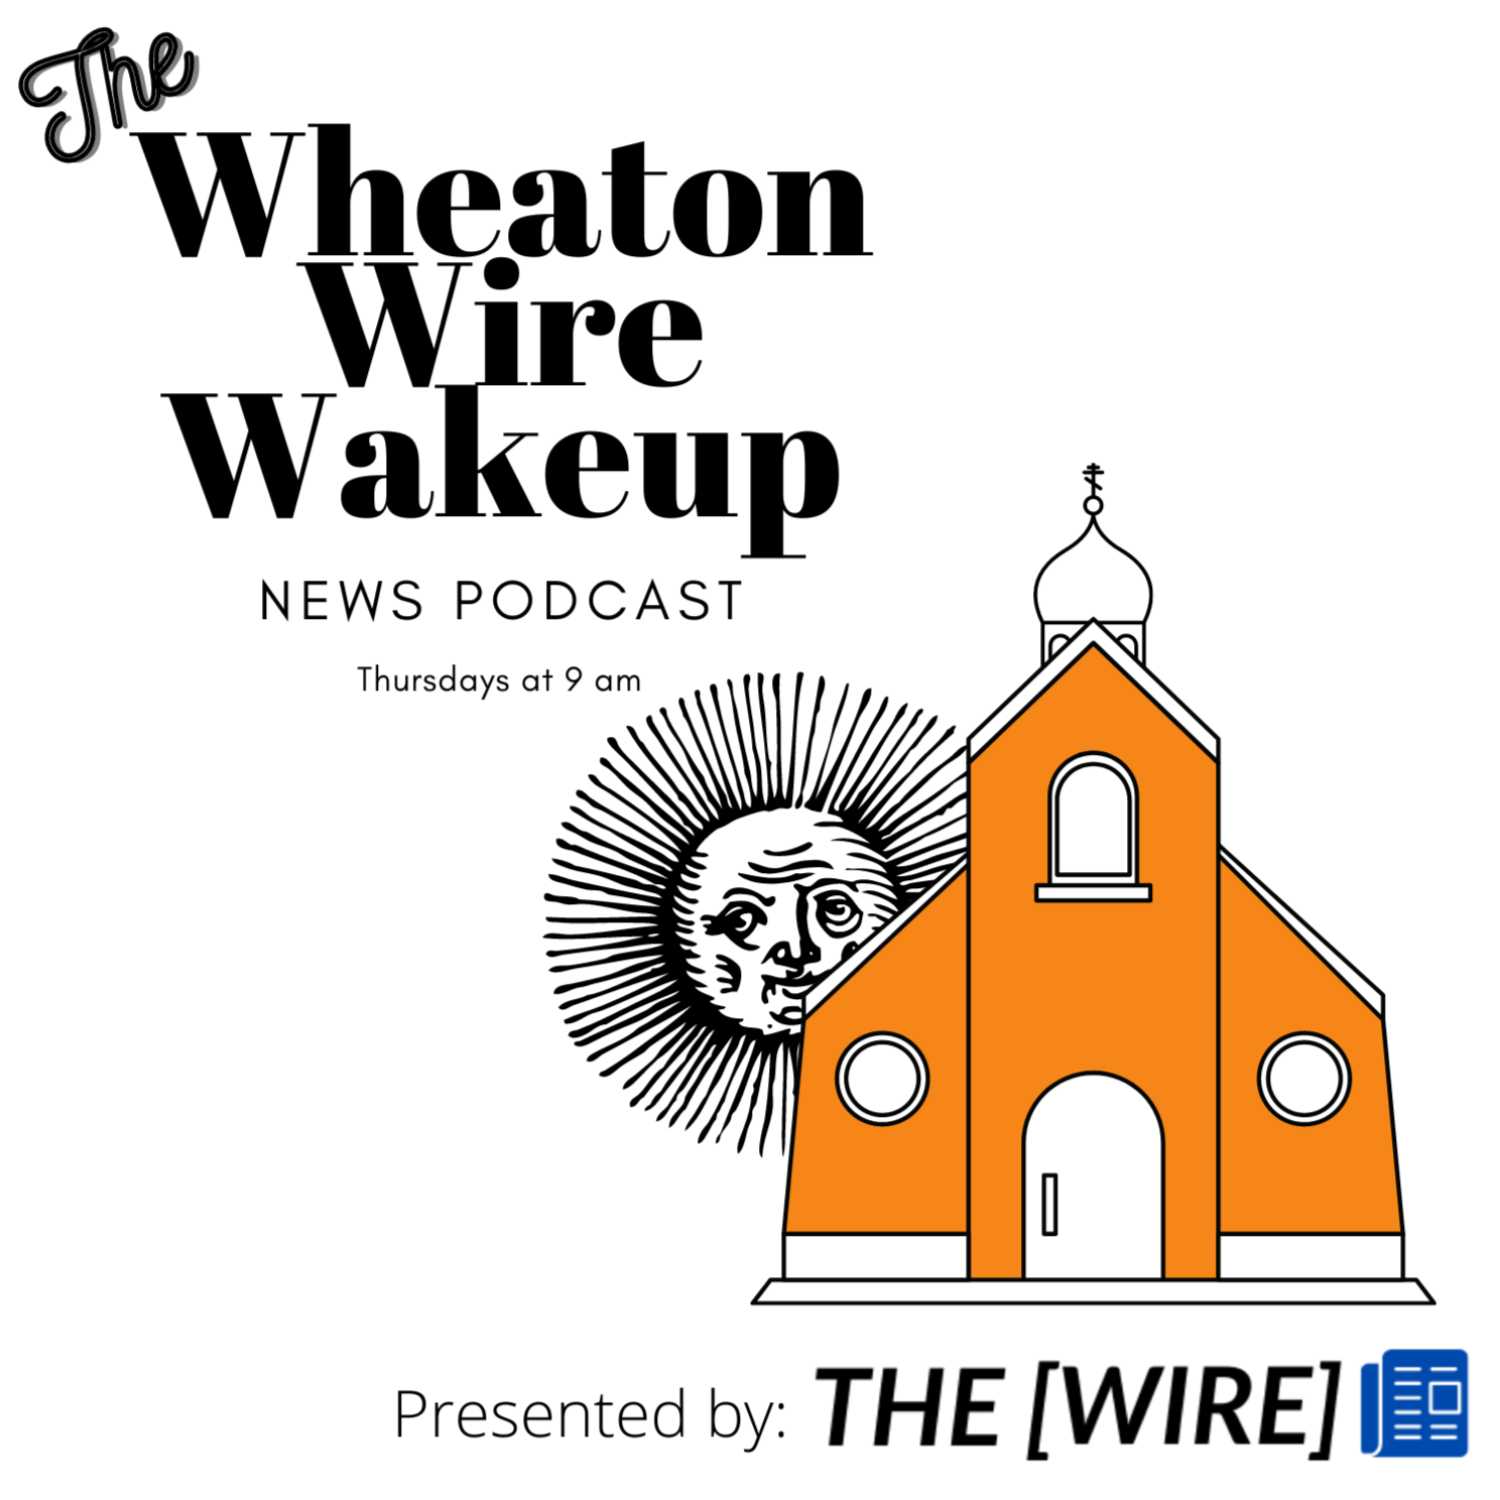 The Wheaton Wire Wakeup